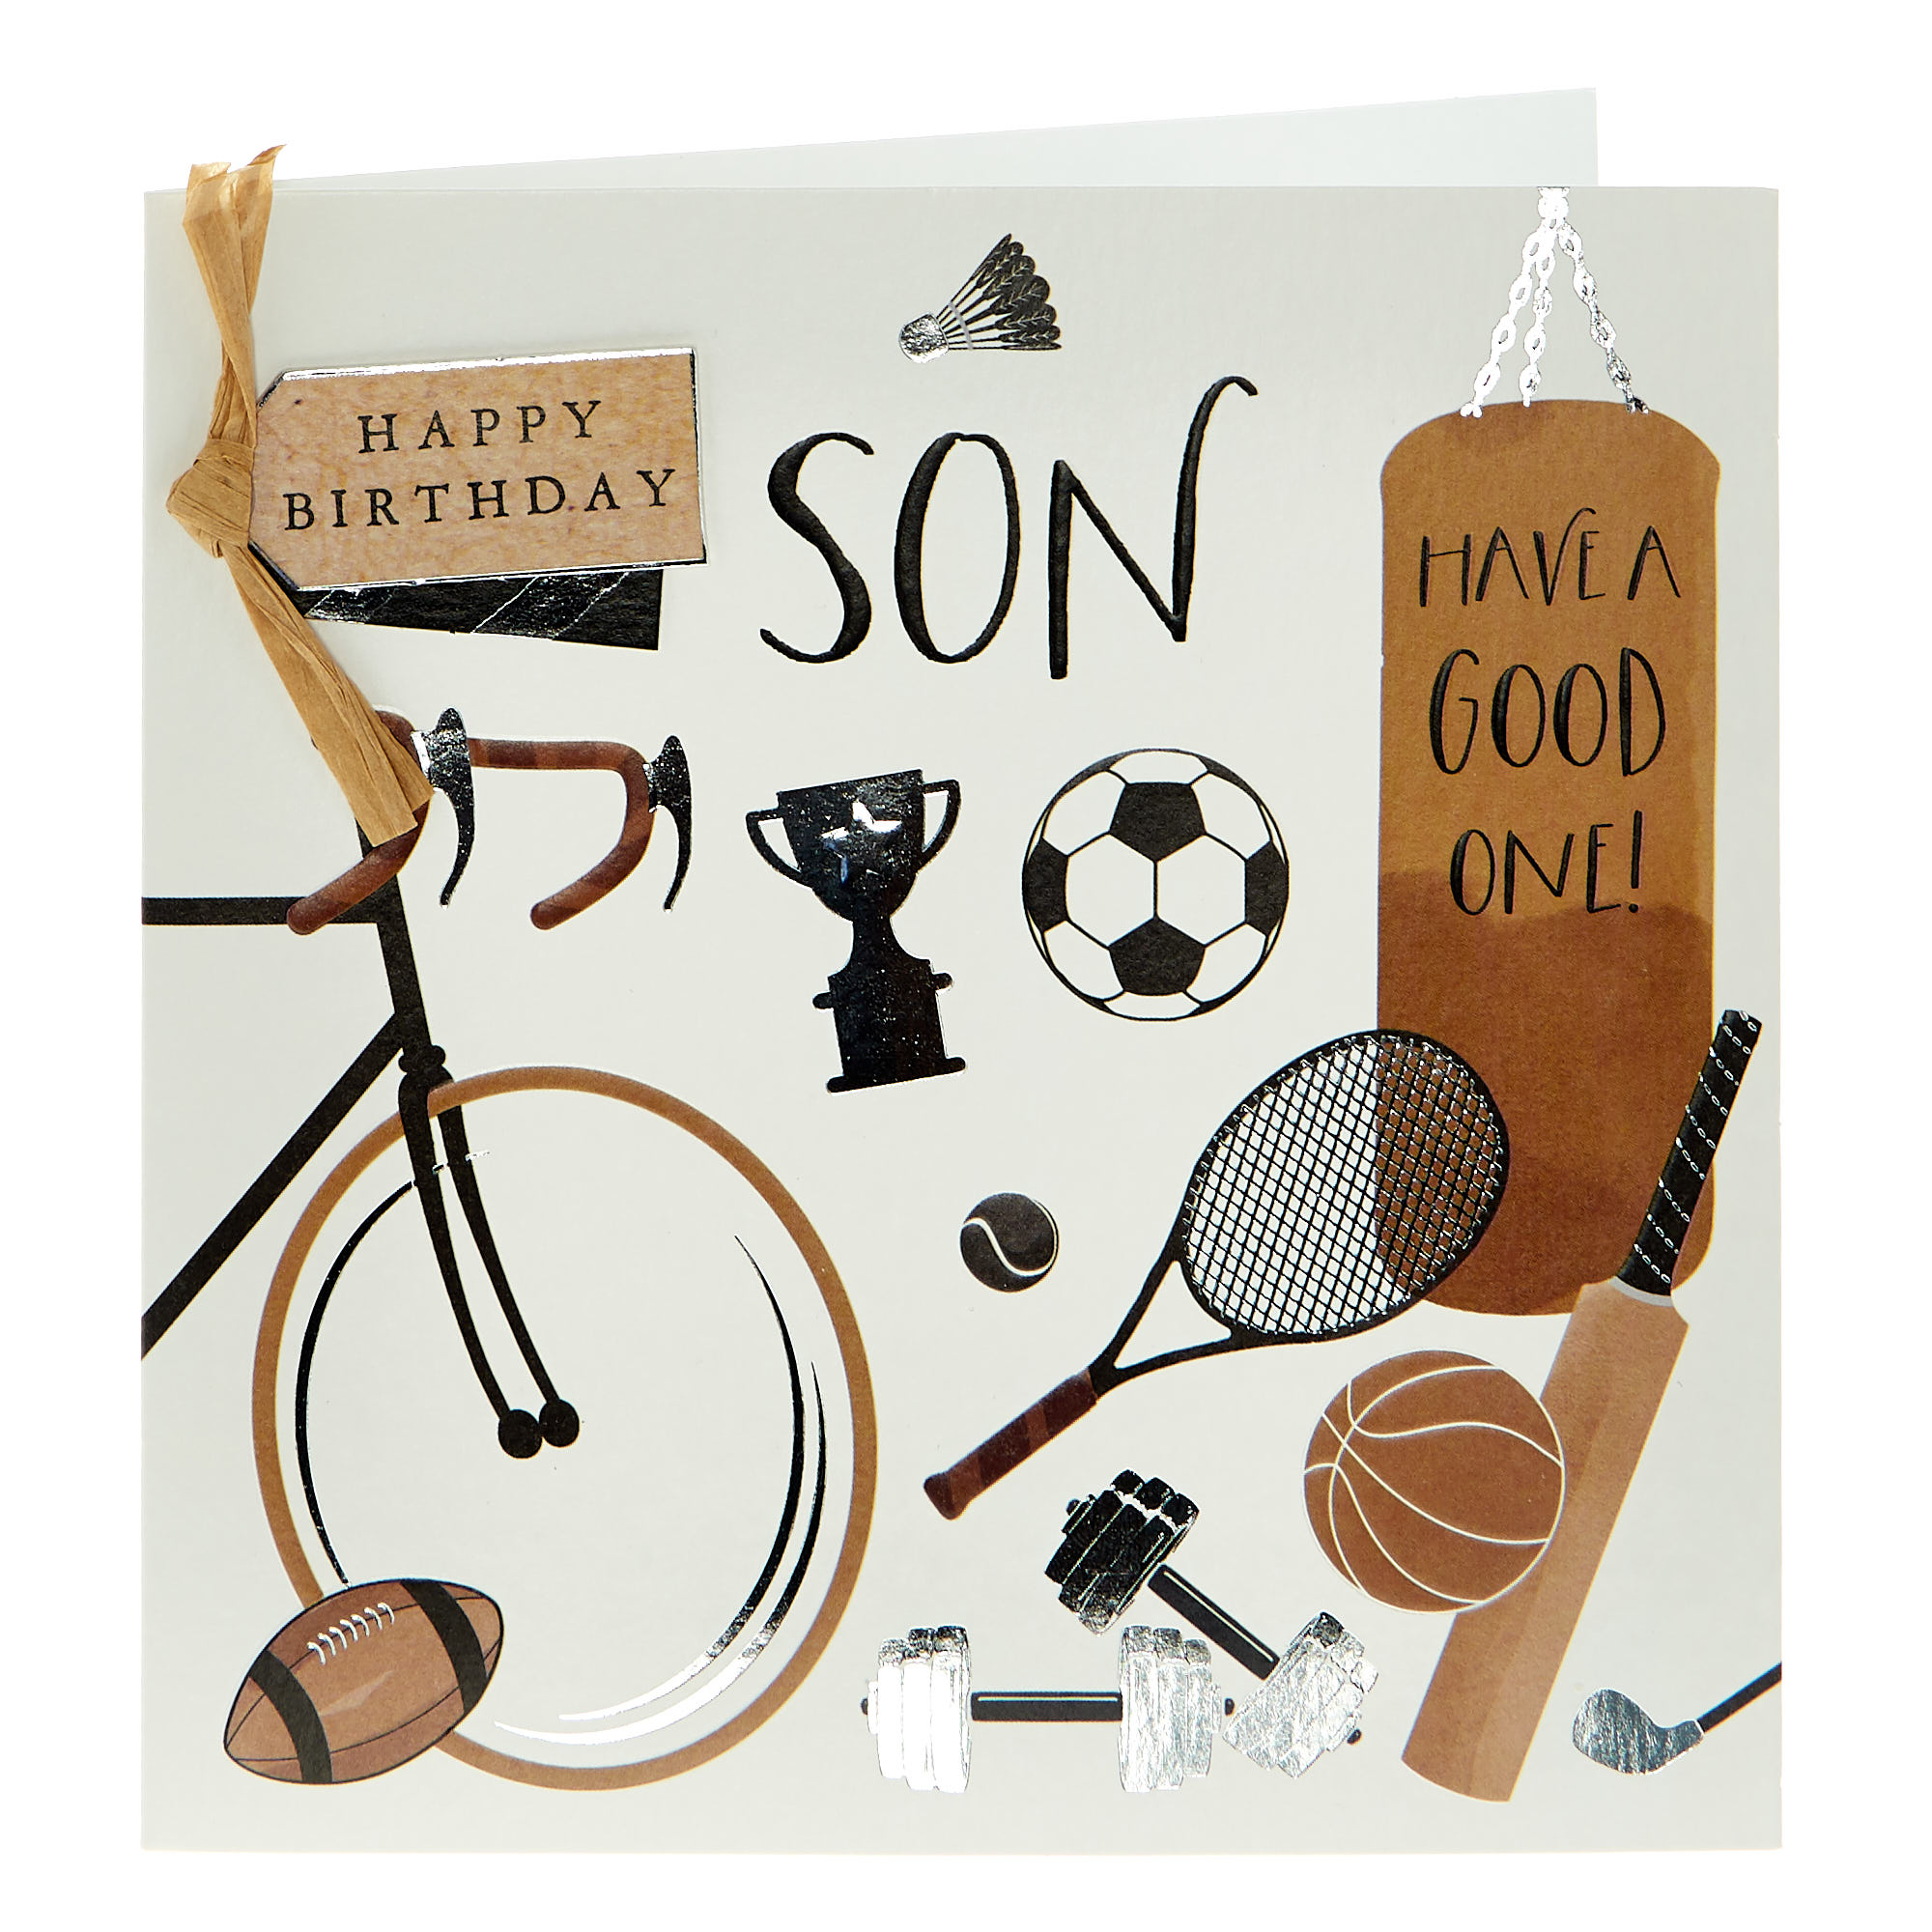 Son Have A Good One Sports Gear Birthday Card